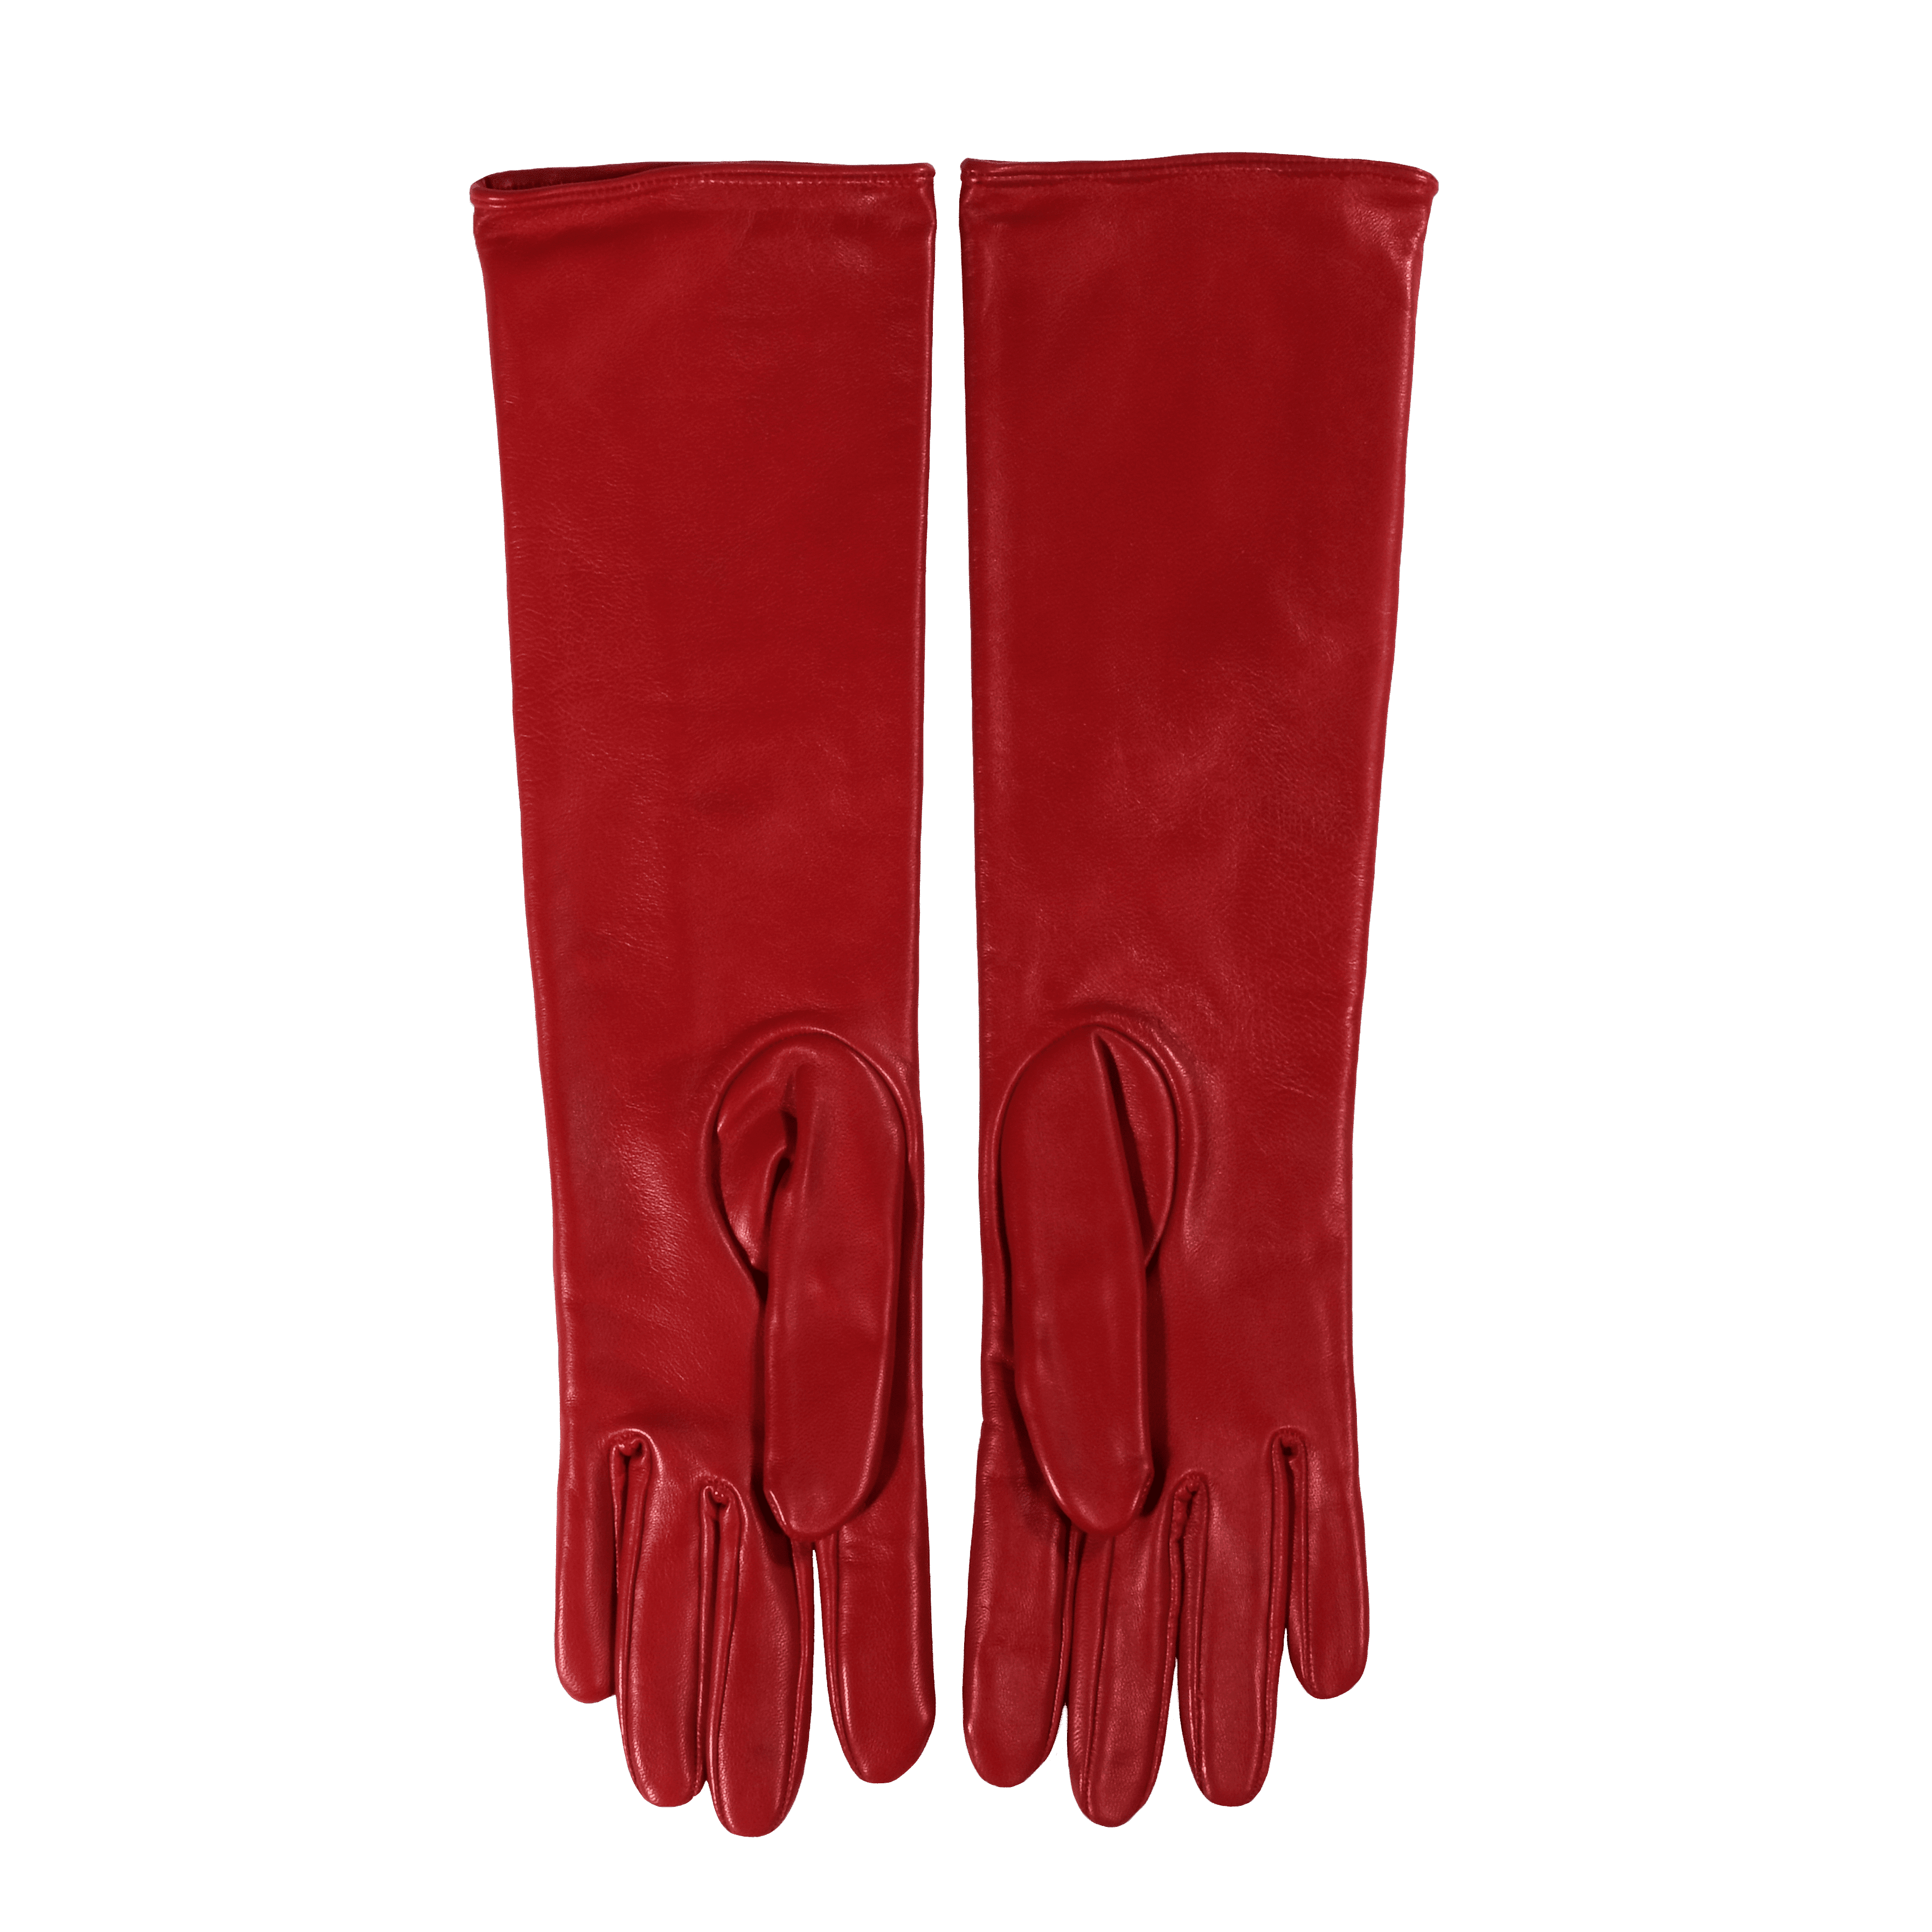 Elif Domanic Minu Handschoenen Rood 3